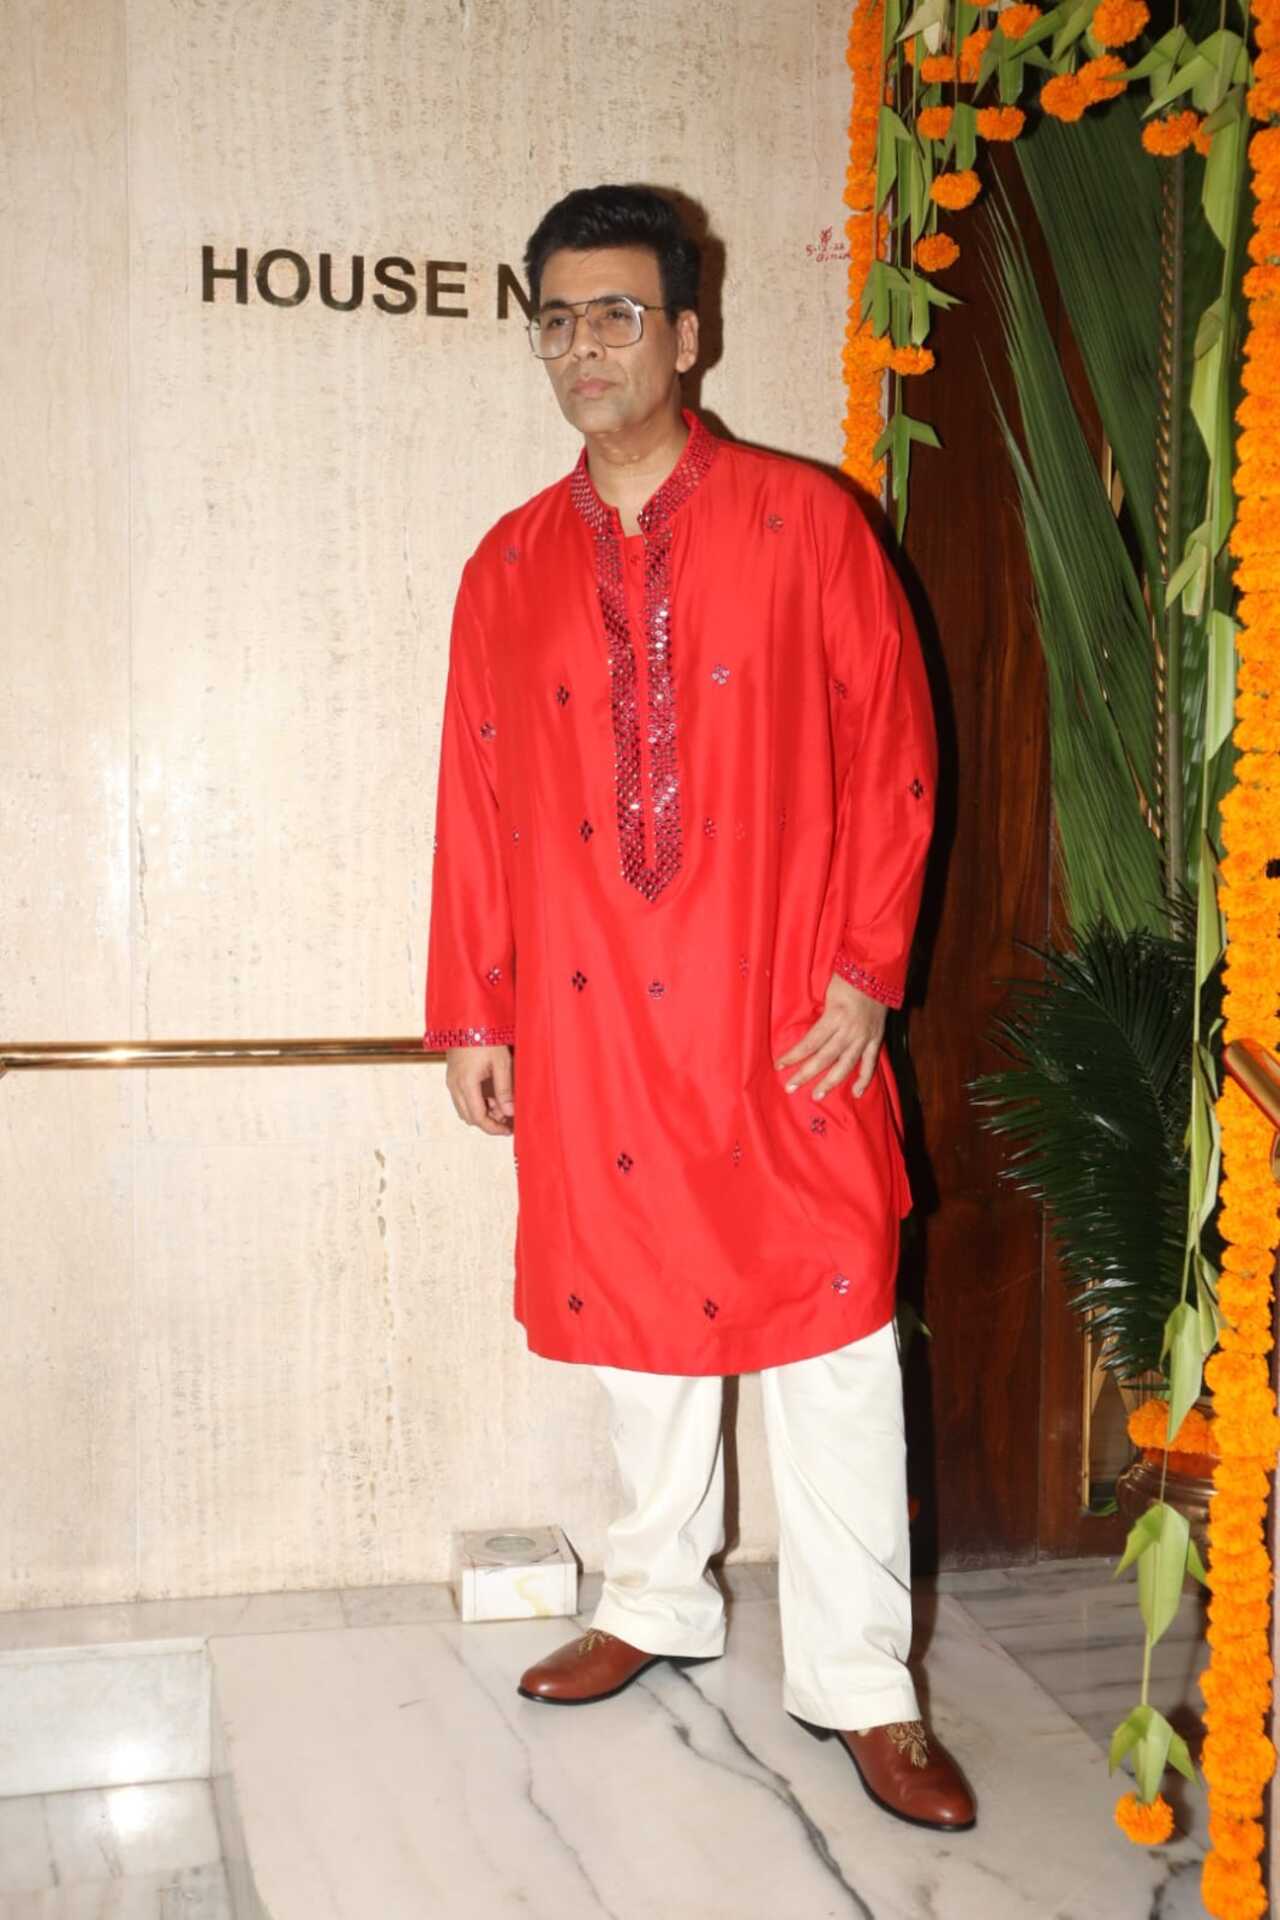 Karan Johar got clicked at Manish Malhotra's Ganesh Chaturthi celebration. The ace director wore a shimmery red kurta with white pyjama